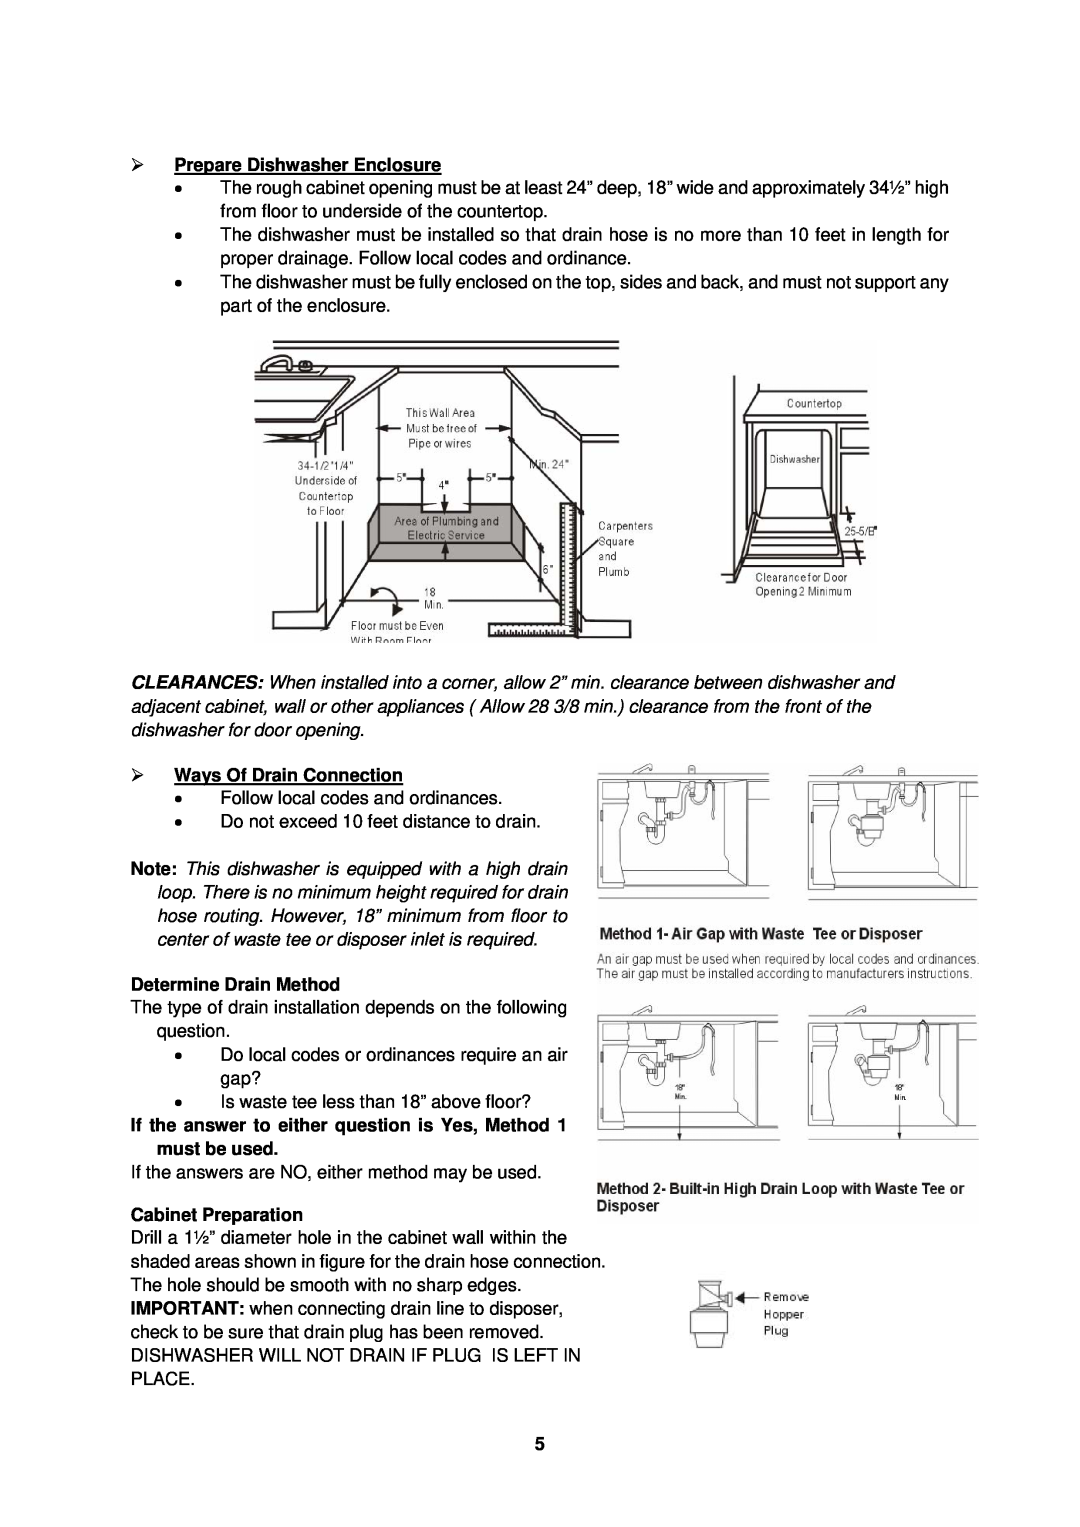 Avanti DW182ESS ¾Prepare Dishwasher Enclosure, ¾Ways Of Drain Connection, Determine Drain Method, Cabinet Preparation 